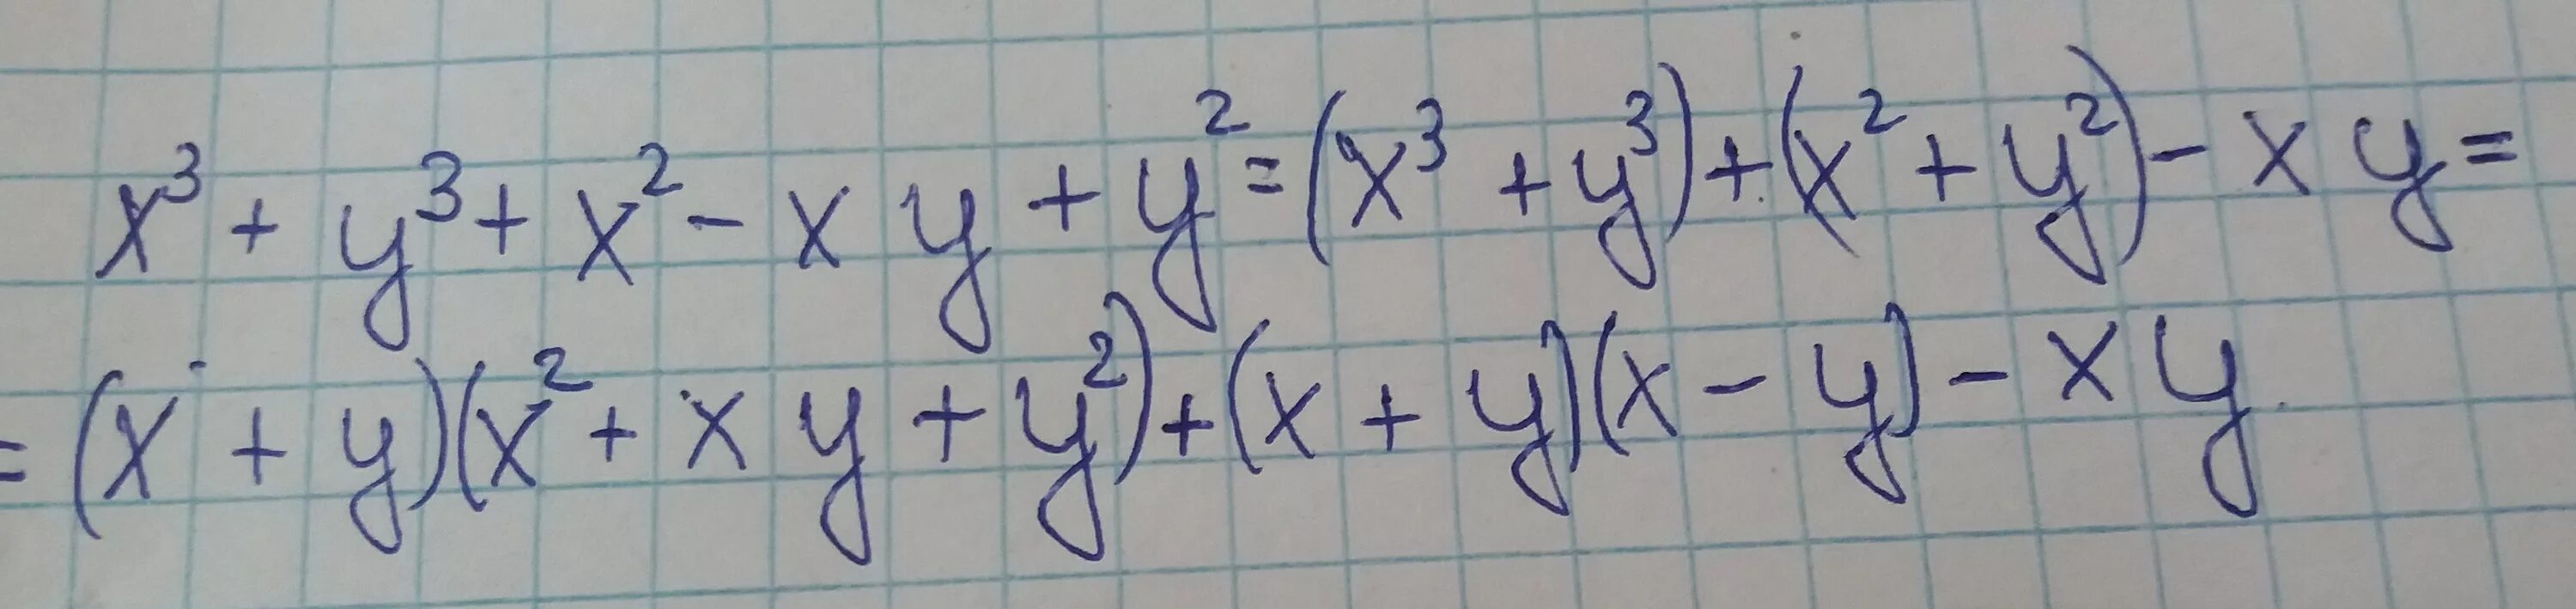 Интересное х х х. Разложите на множители x2-y2+x-y. X^2+3x-3y-y^2 разложить на множители. Разложрте га множители x²y³-3x³y. X 3 Y 3 разложить на множители.